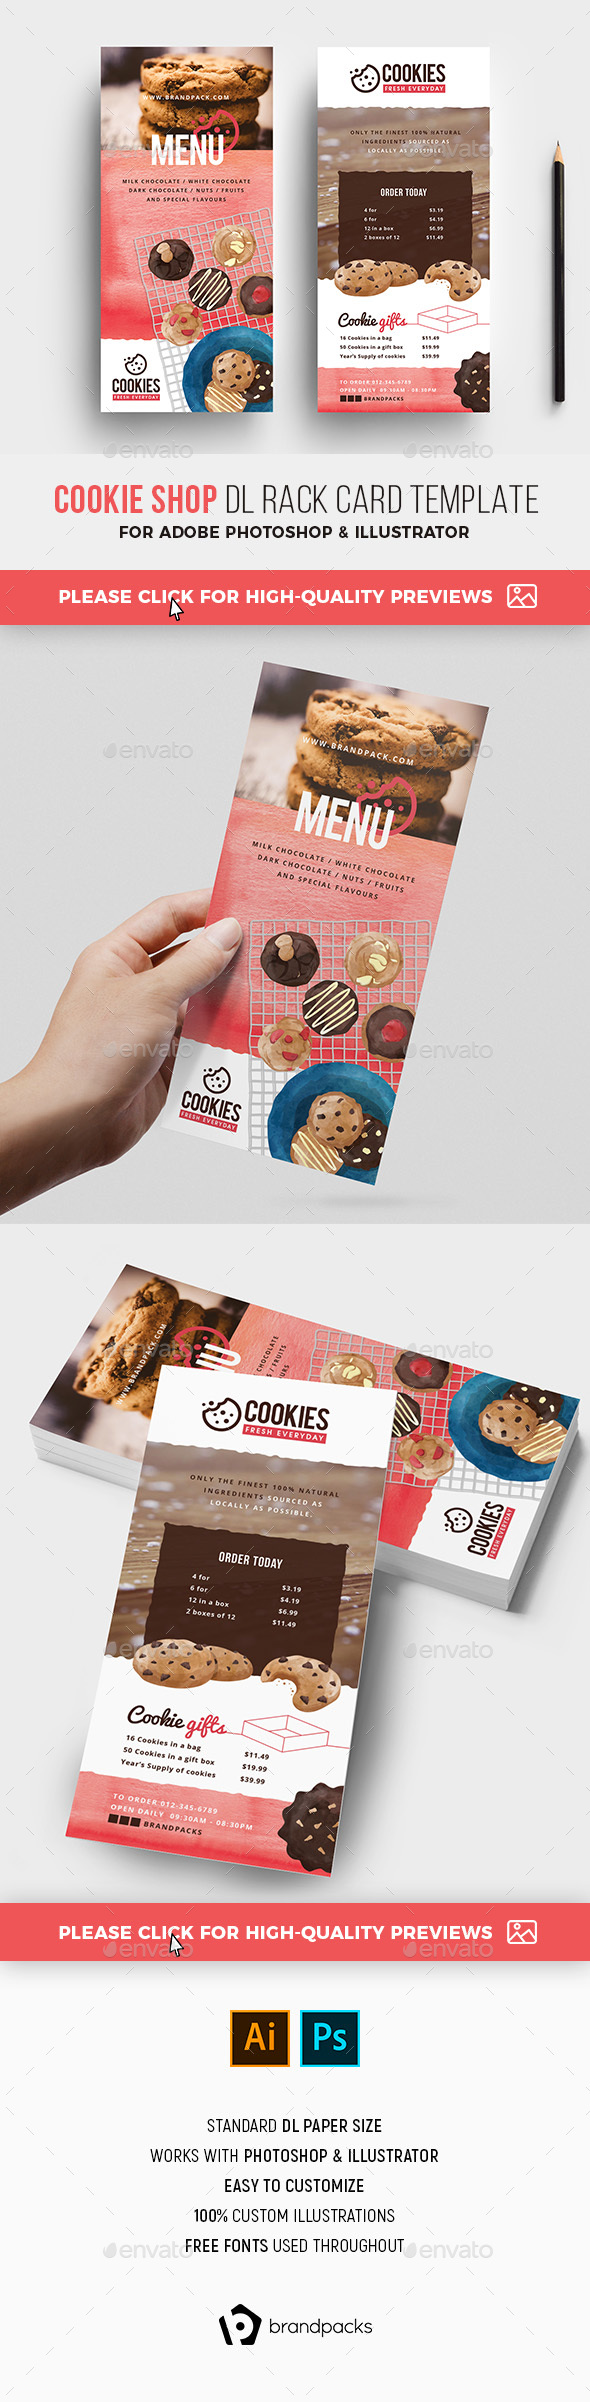 Cookie Shop DL Card